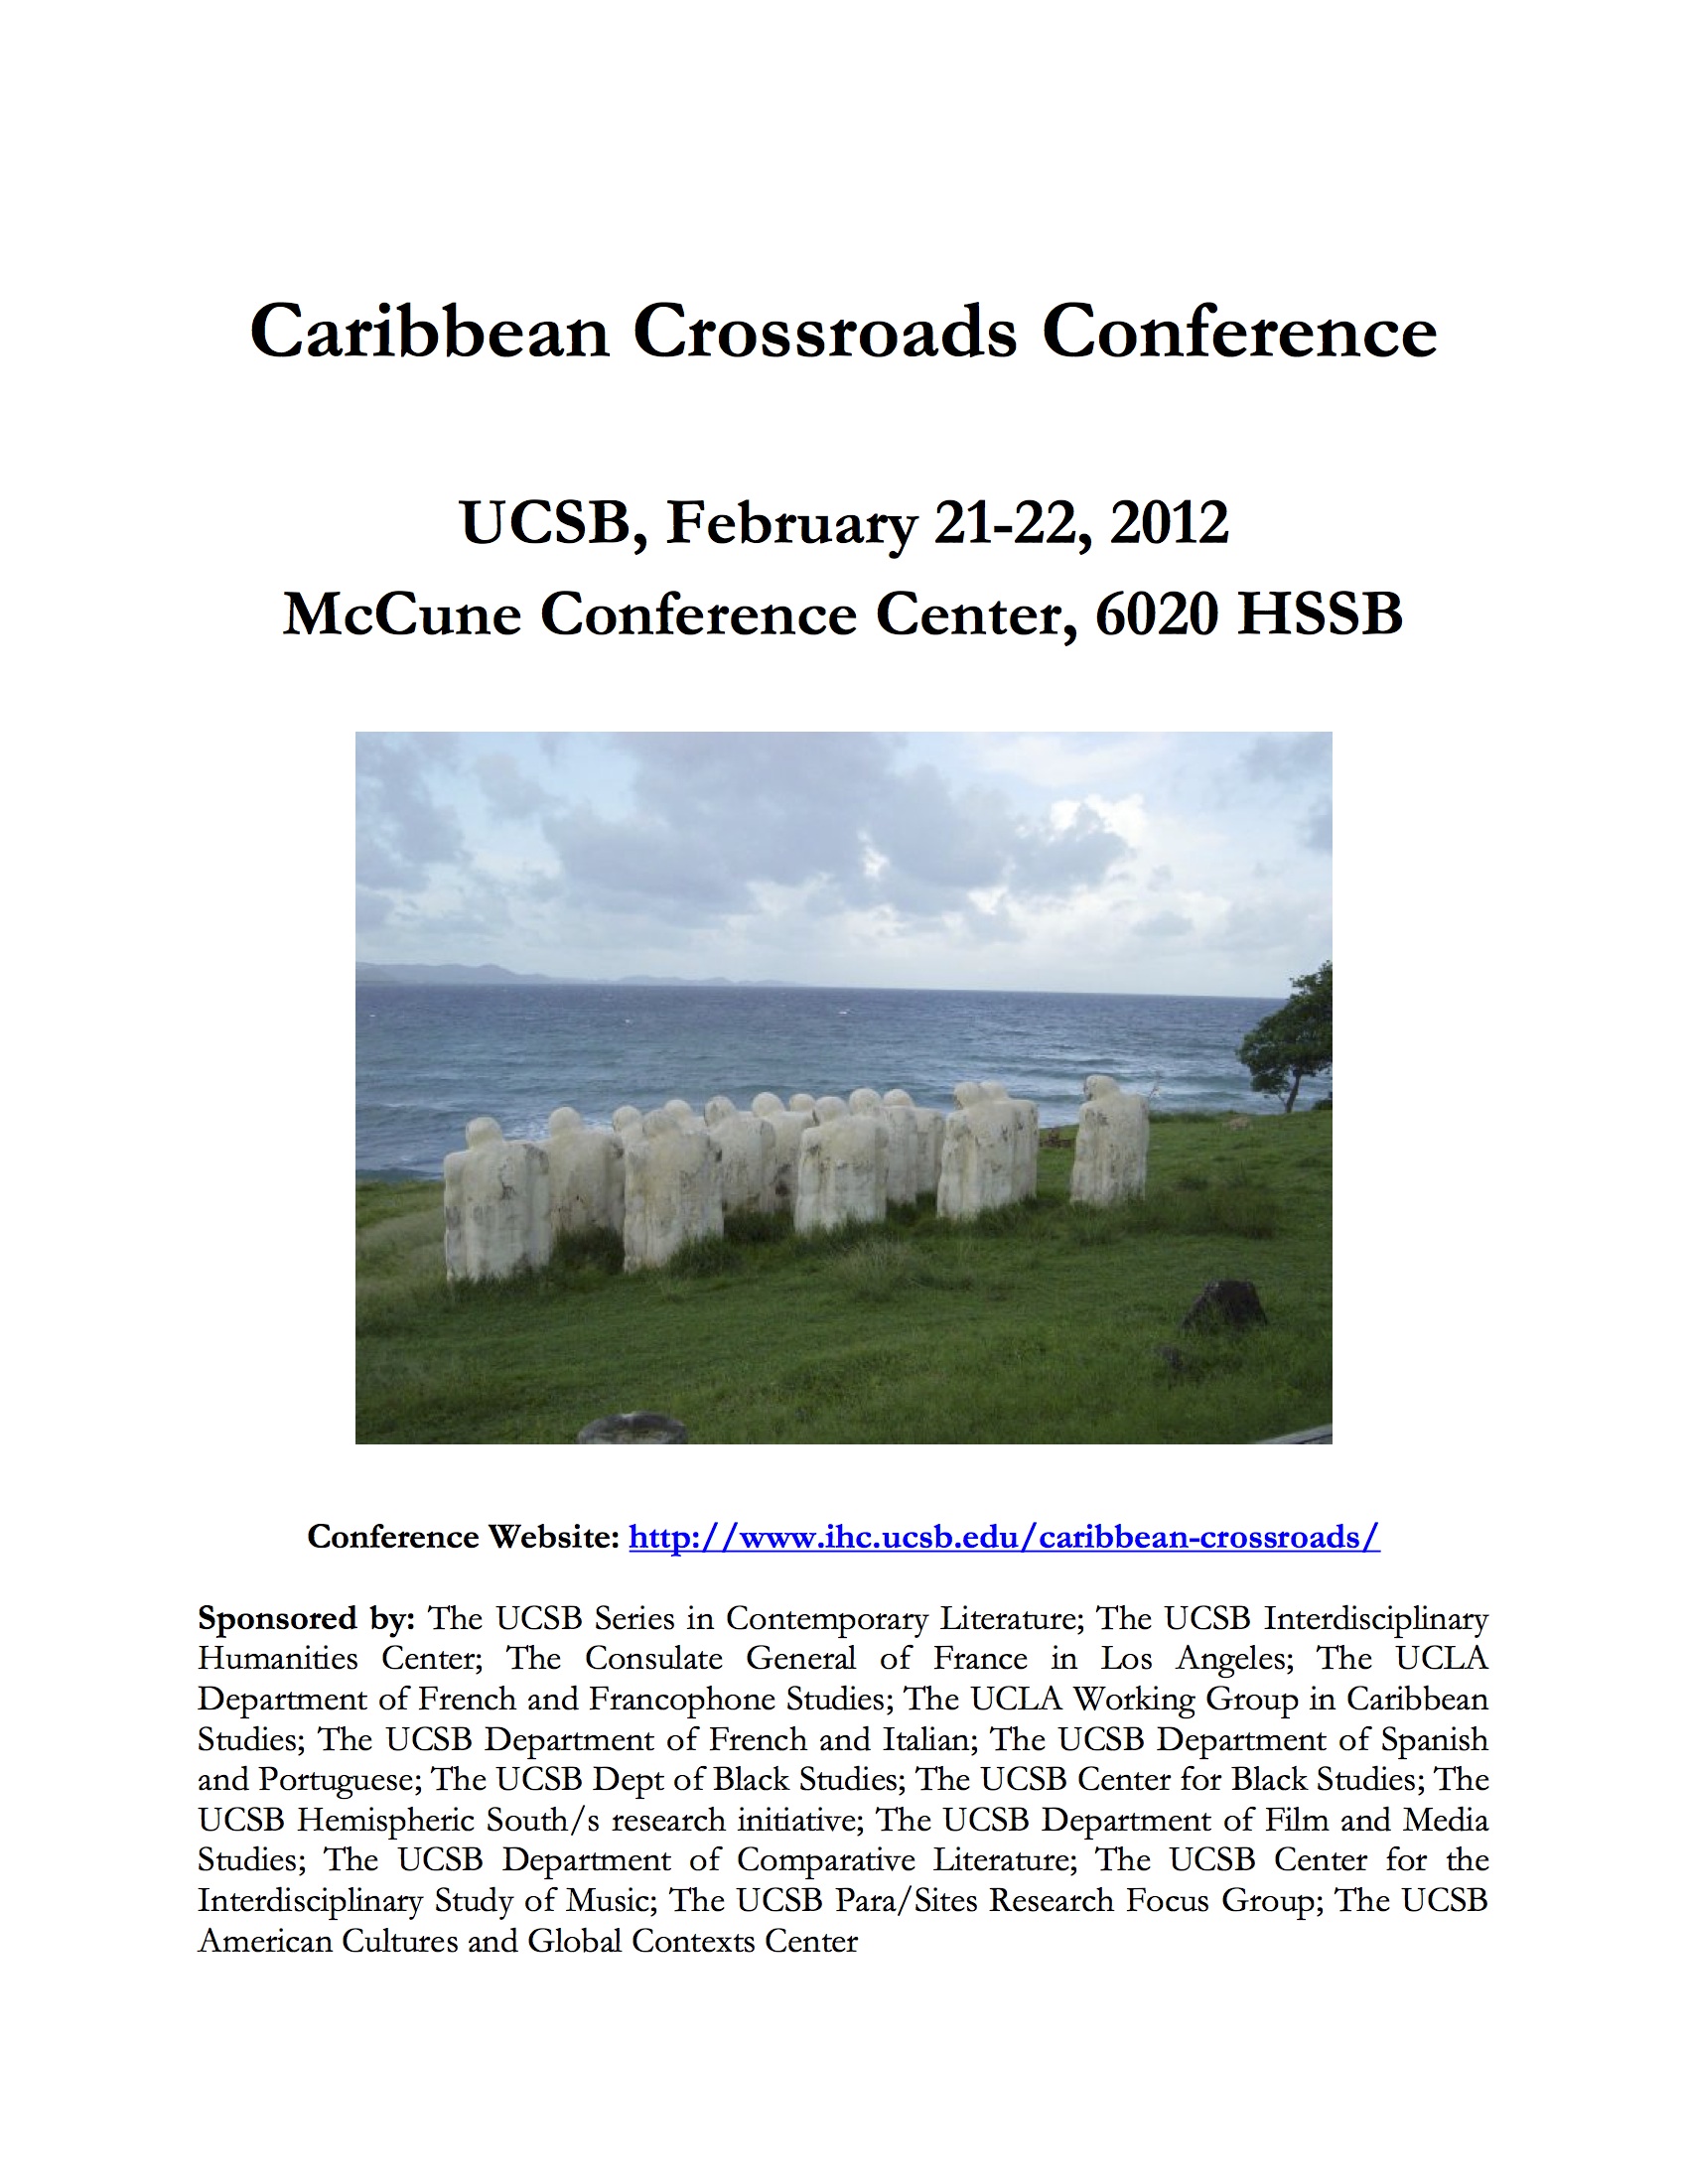 poster of caribbean crossroads